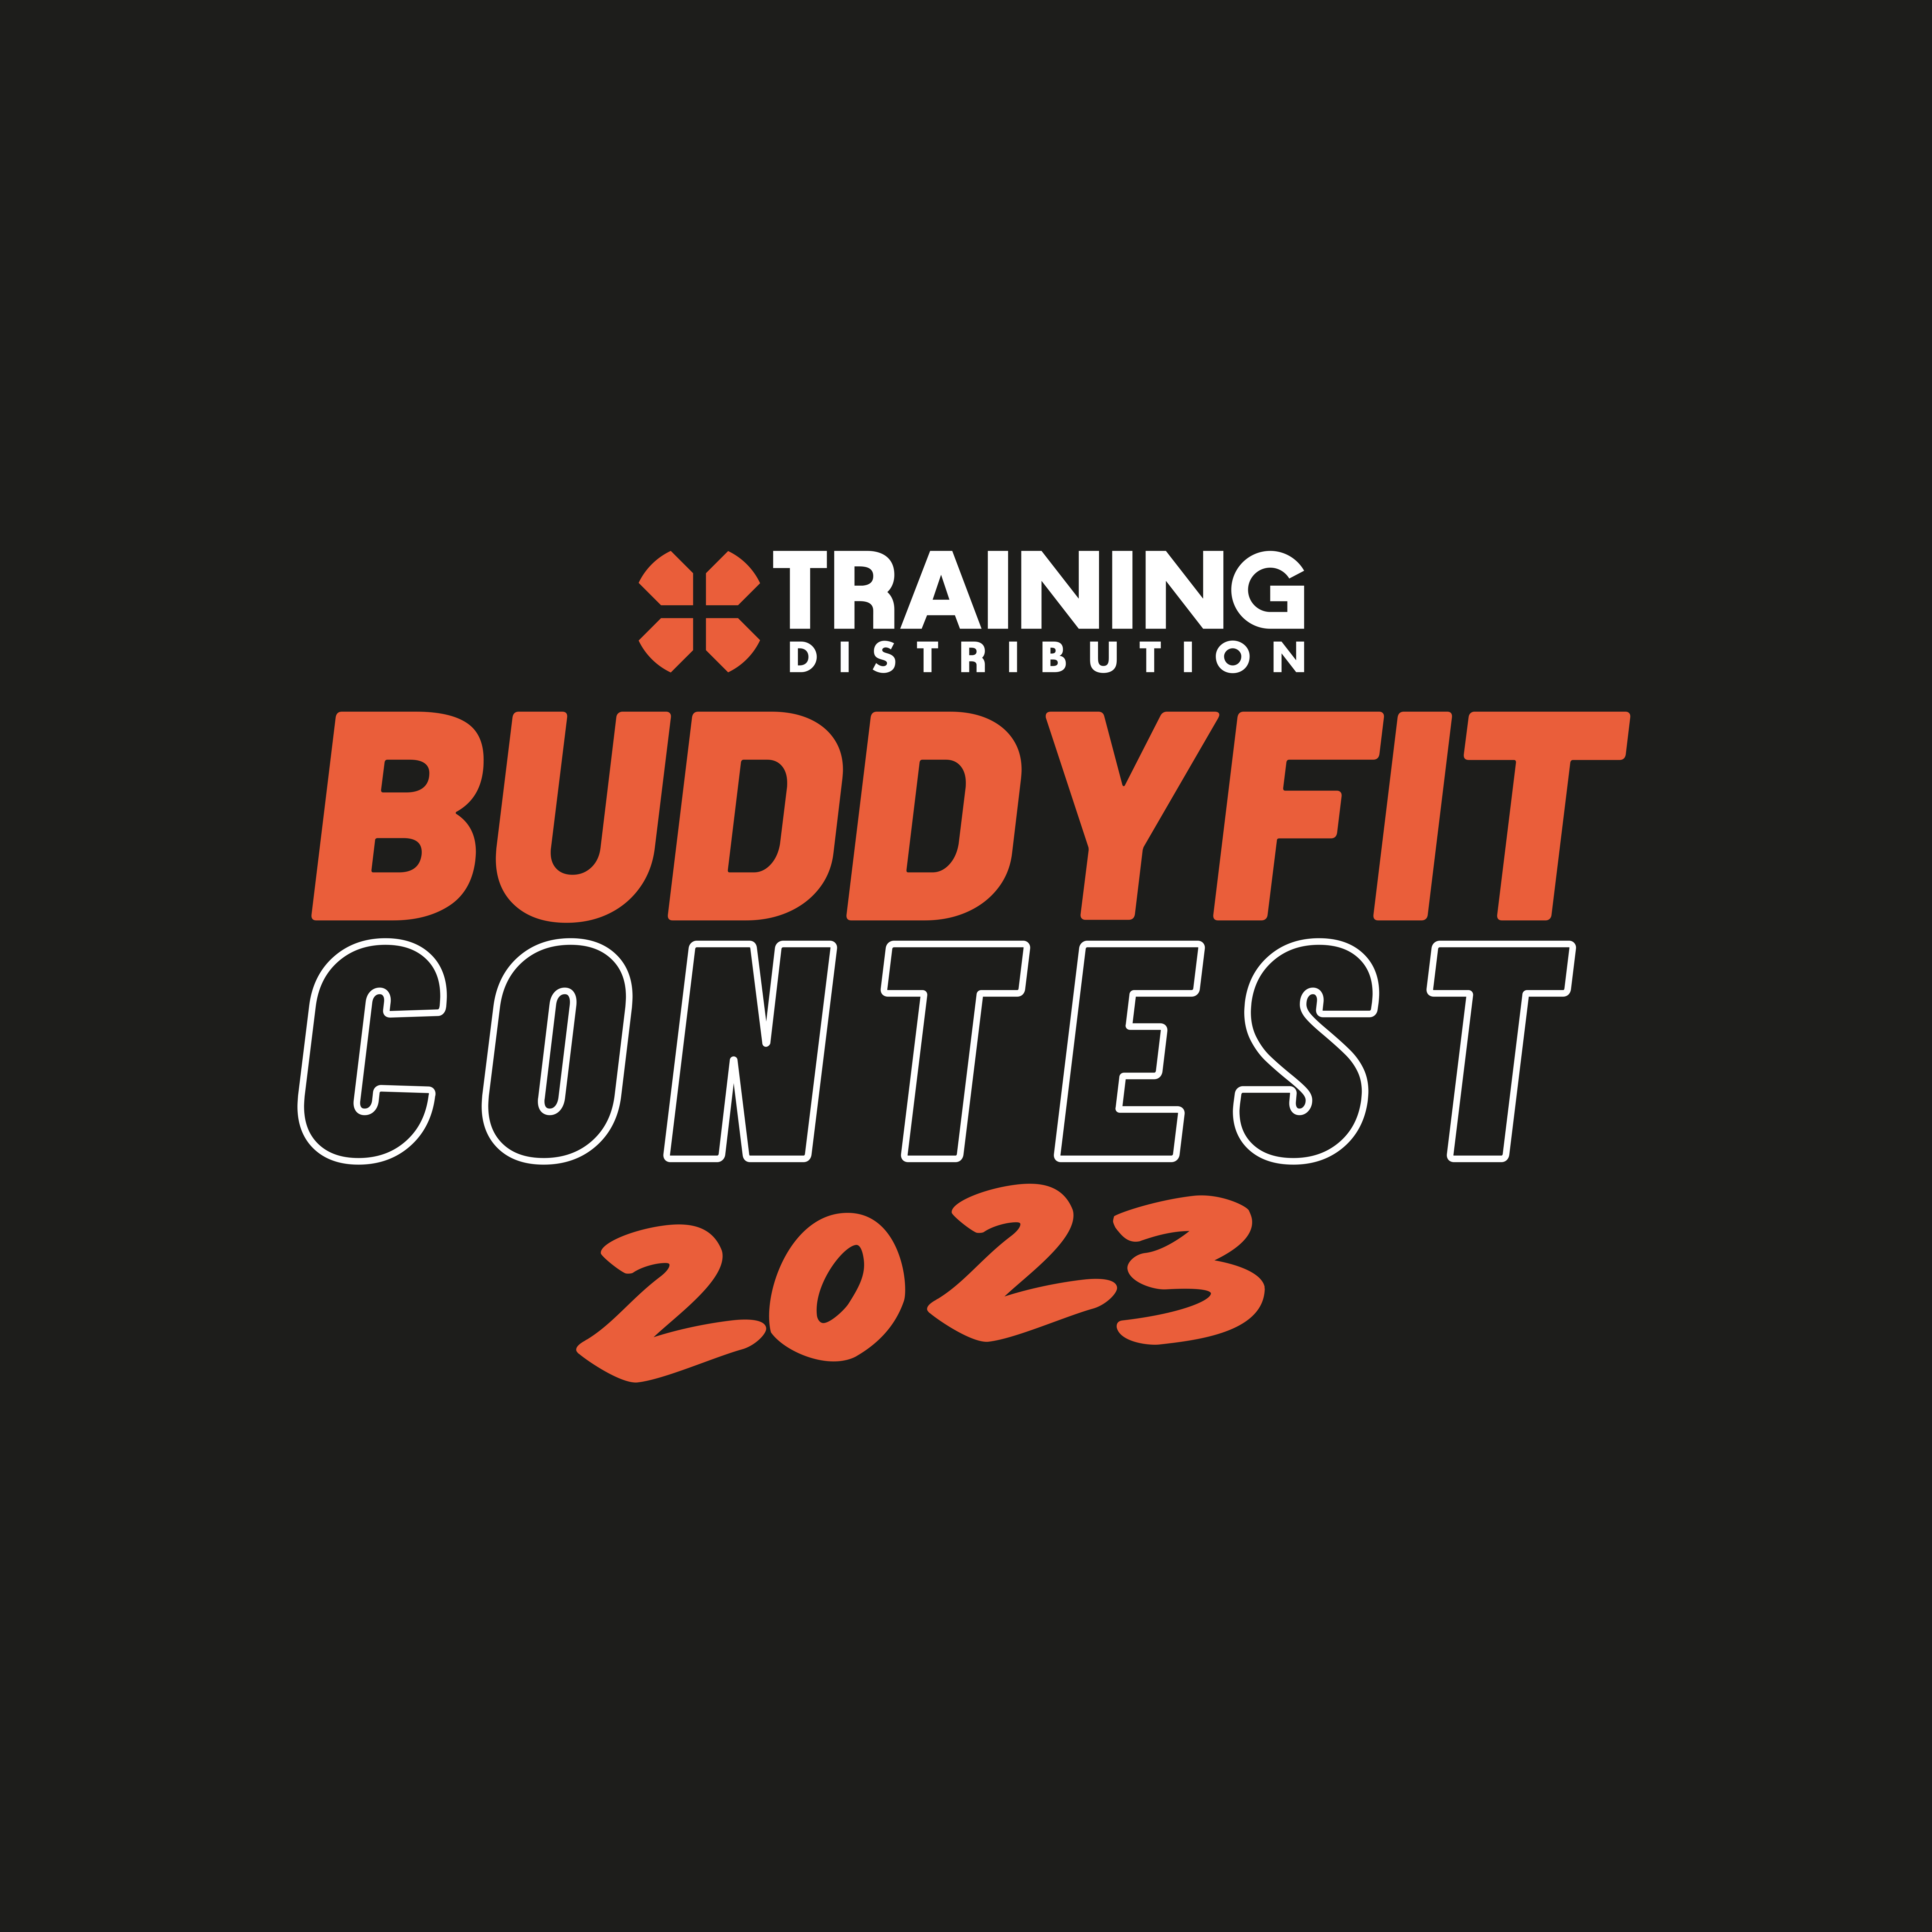 Buddyfit contest 2023 partenaire training distribution